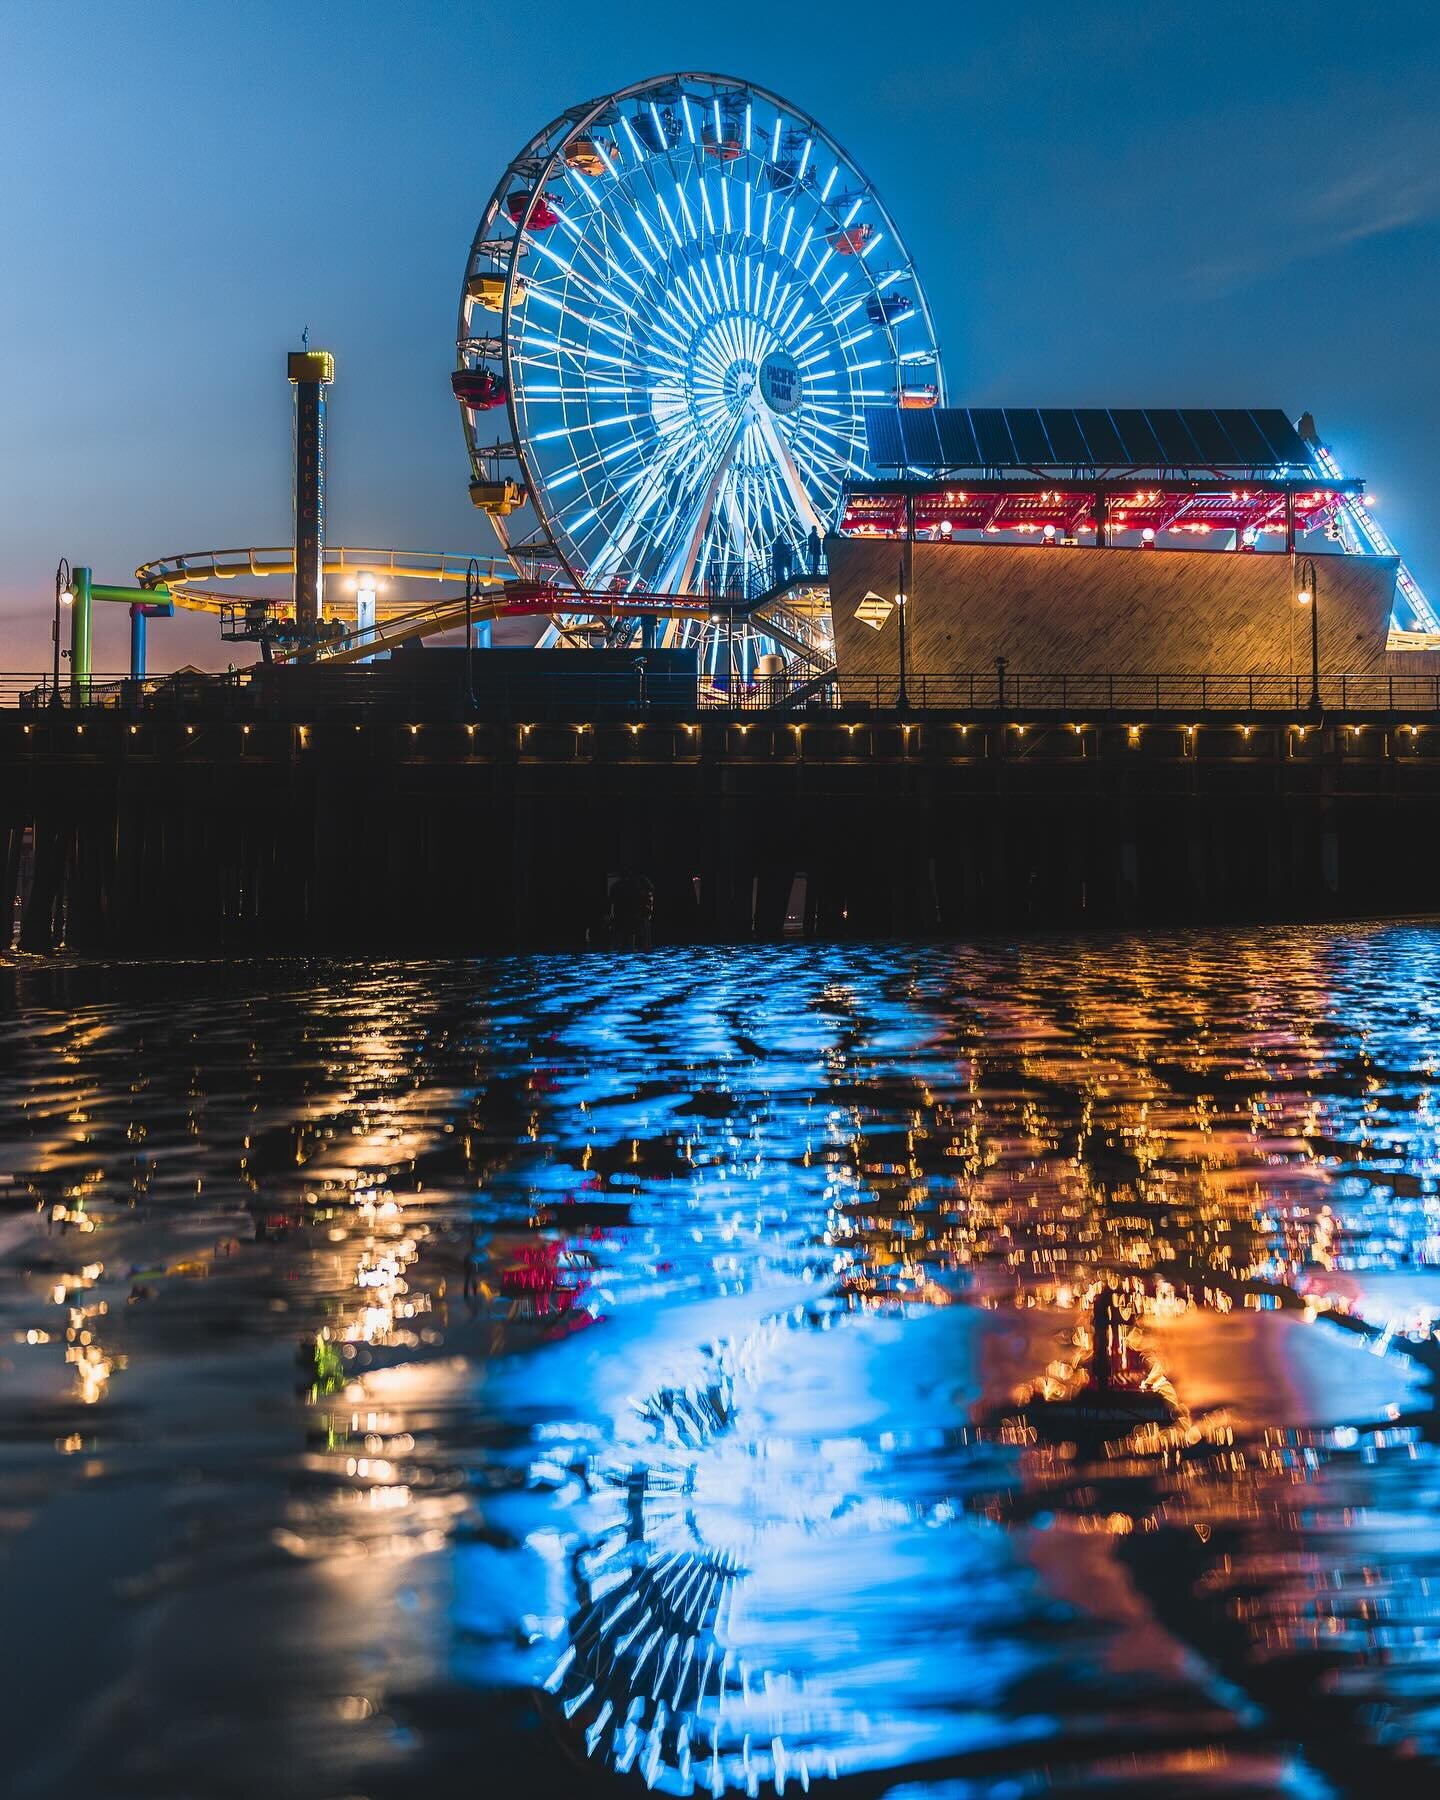 Nighttime at the Santa Monica Pier.

Camera: Sony A7Riii @sony.unitedkingdom 
Lens: Sigma 35mm f/1.4 DG DN

#losangelesphotographer 
#beachphotography 
#creativeoptic 
#dof_addicts 
#opticalwander 
#losangeles 
#travelphotography 
#sonyalpha 
#moodye